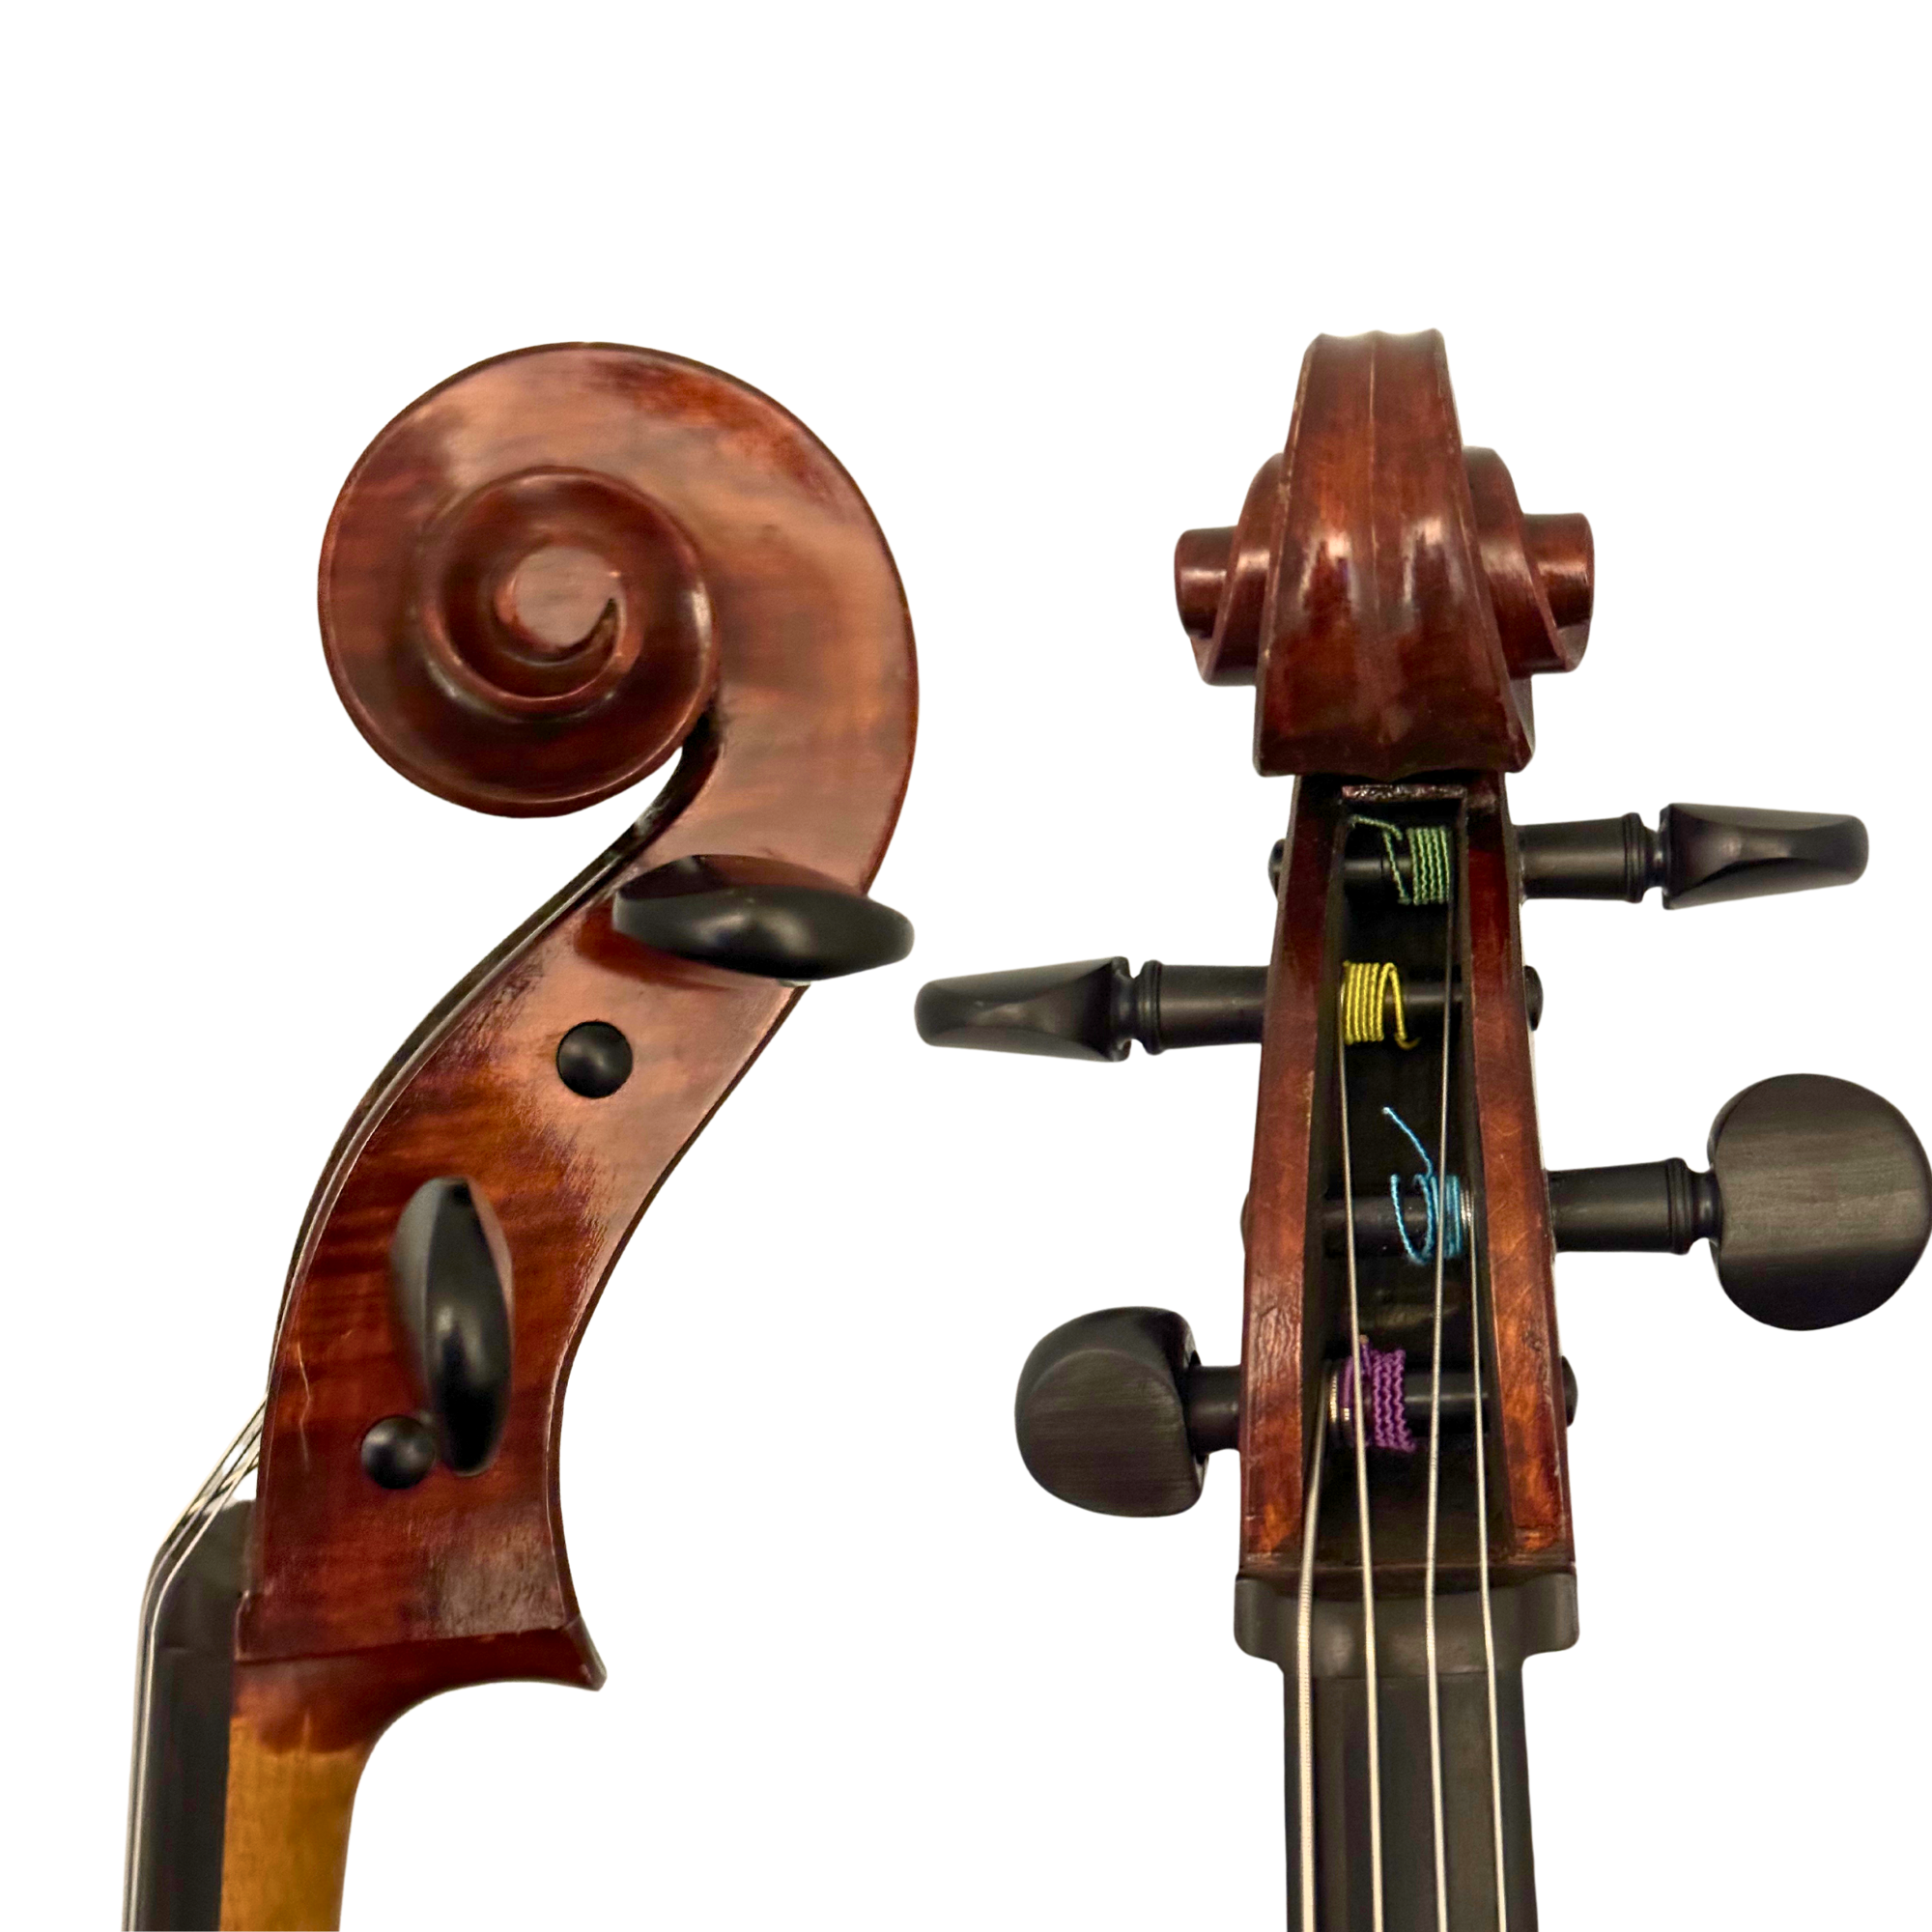 StringWorks Maestro 7/8 Cello in action